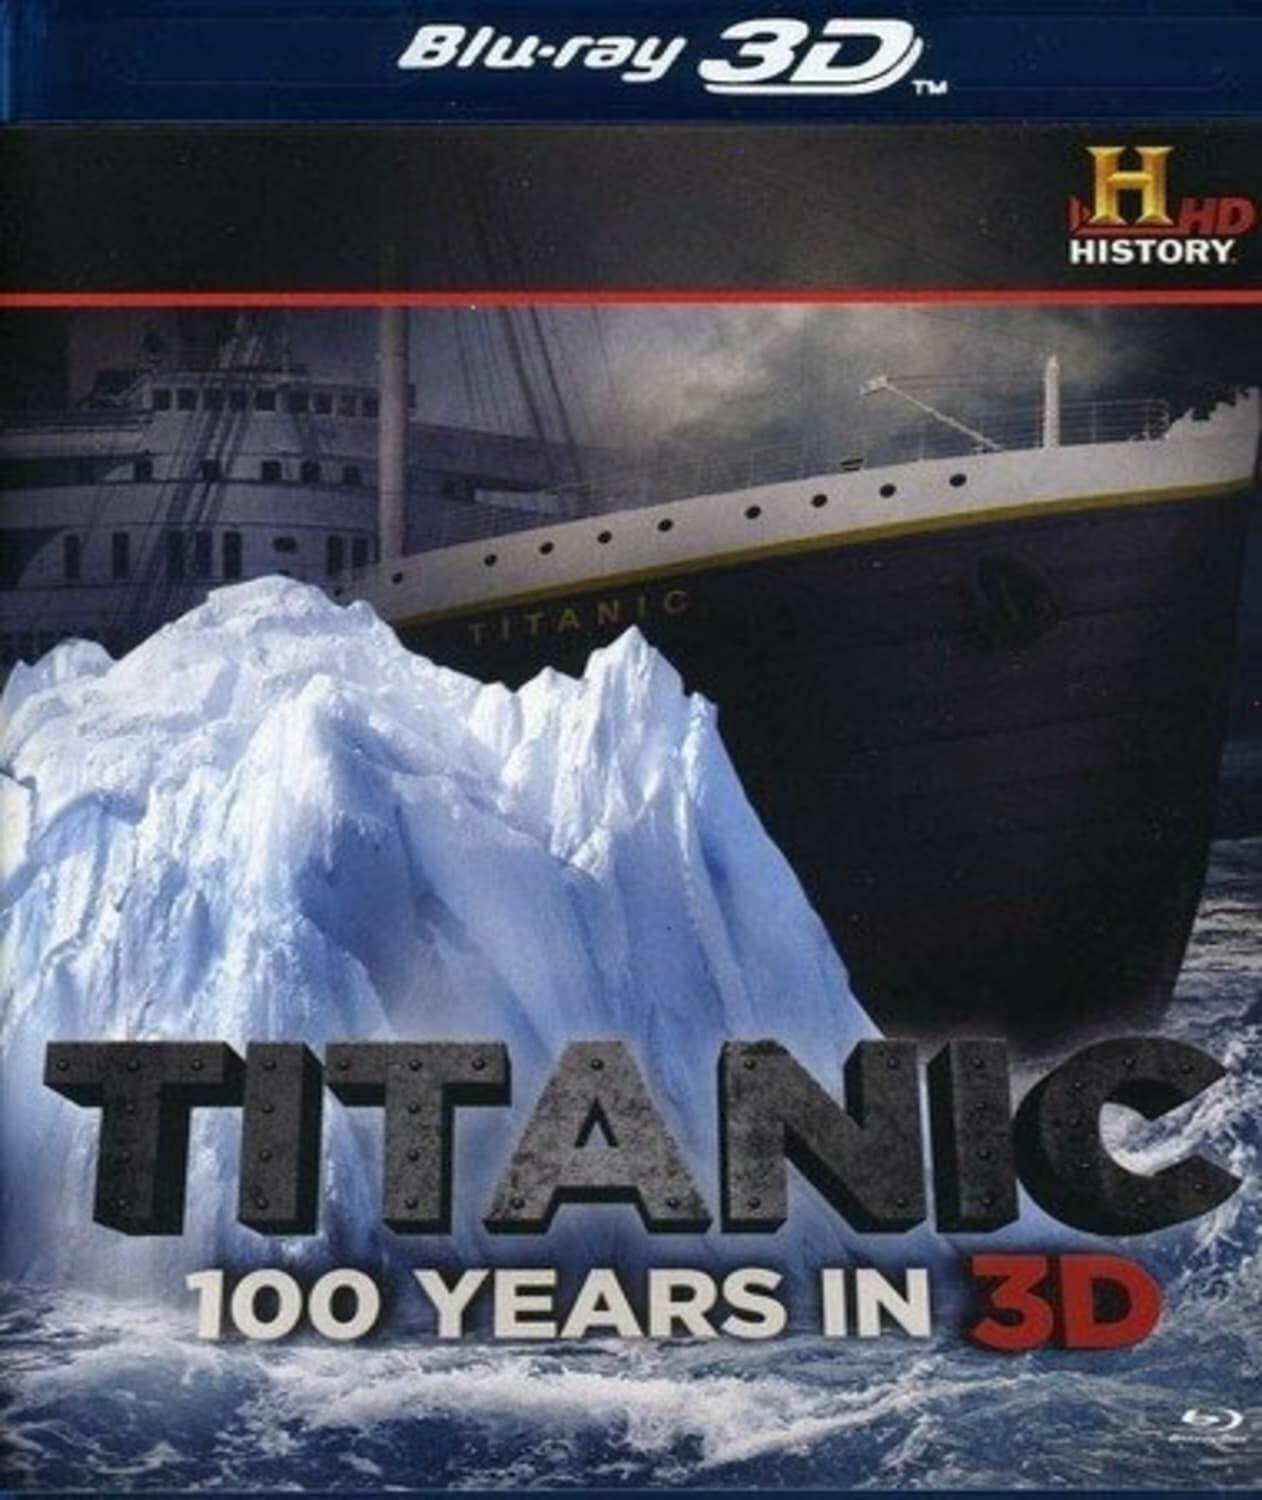 Titanic: 100 Years in 3D (Blu-ray 3D) on MovieShack